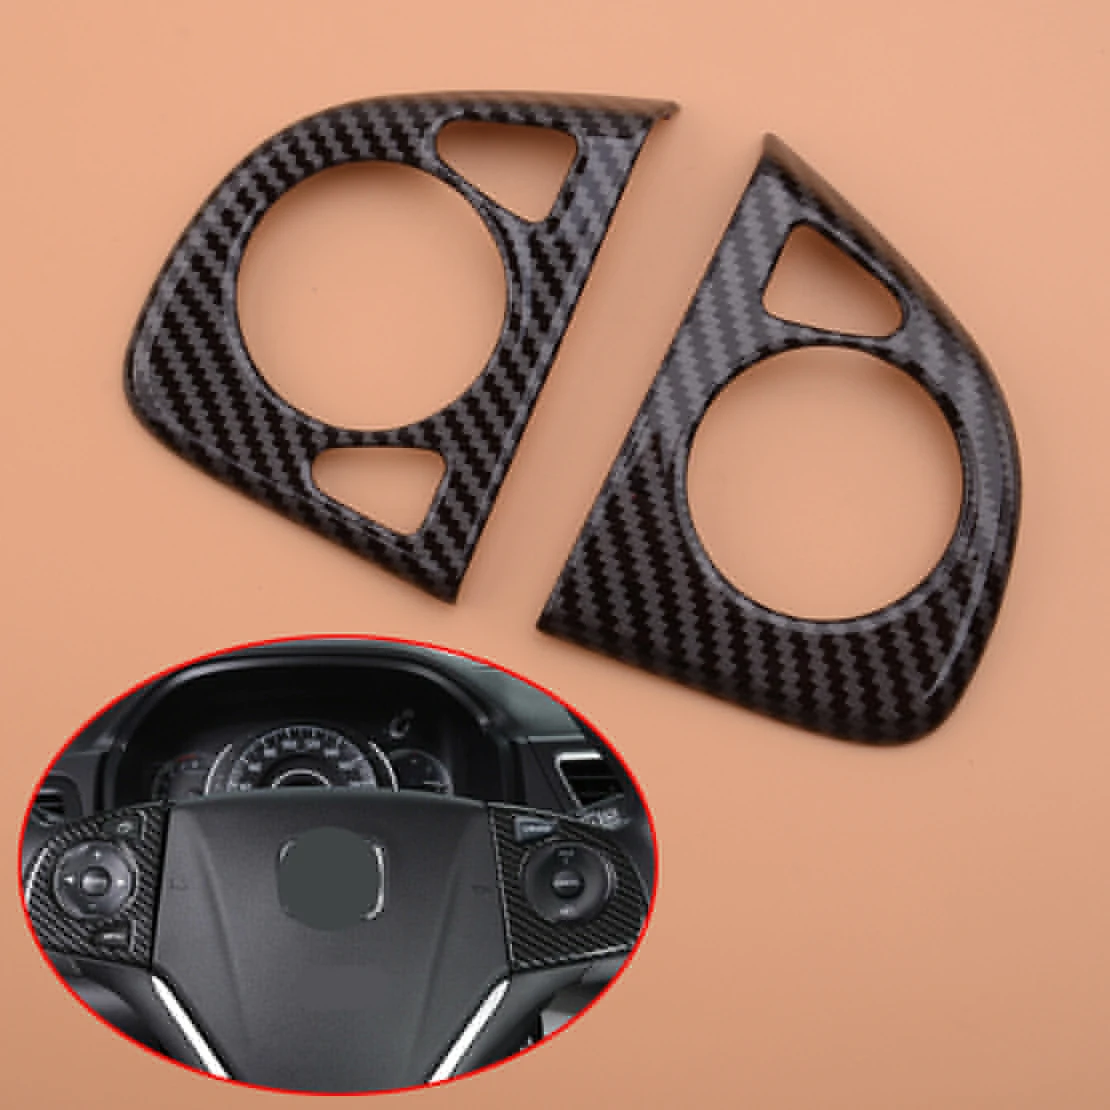 Beler-cubierta embellecedora de botón de volante ABS, estilo de fibra de carbono, color negro, para Honda CRV CR-V, 2012, 2013, 2014, 2015, 2016, 2 uds.